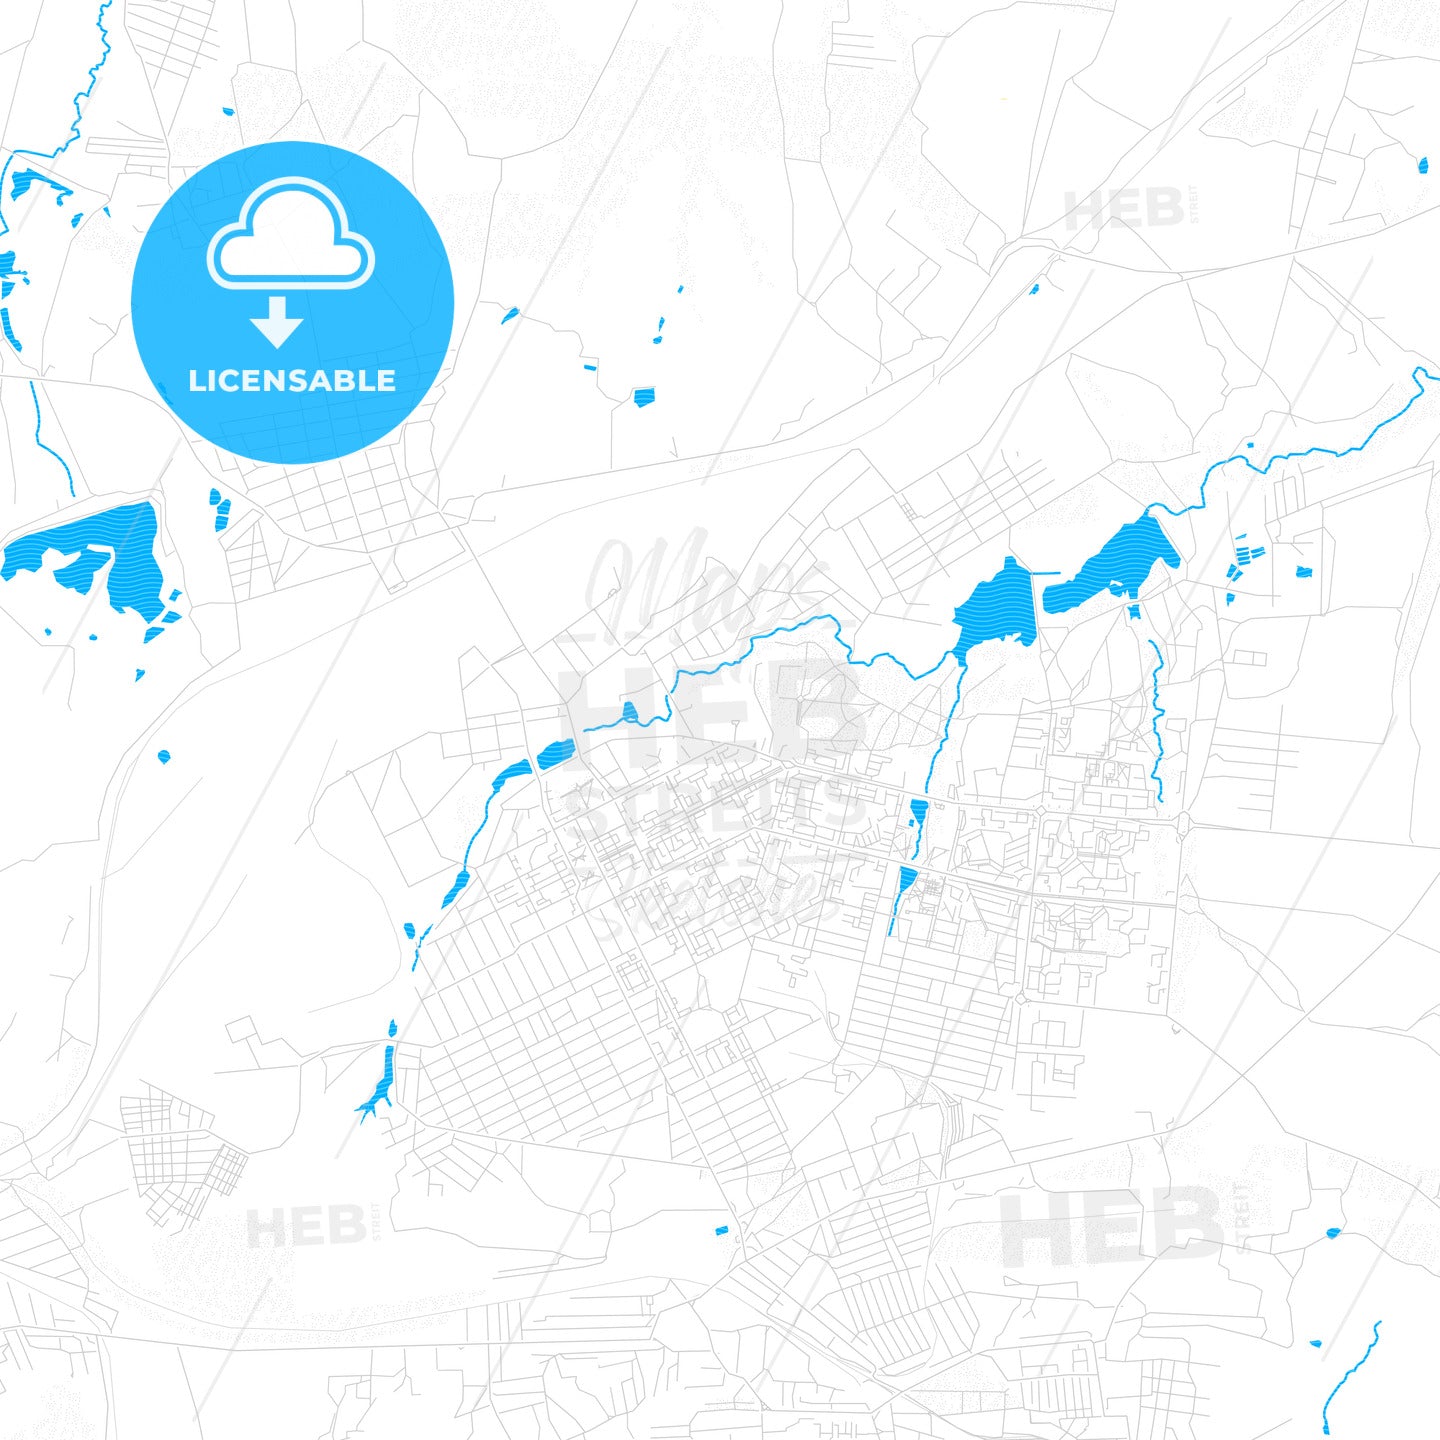 Alchevsk, Ukraine PDF vector map with water in focus